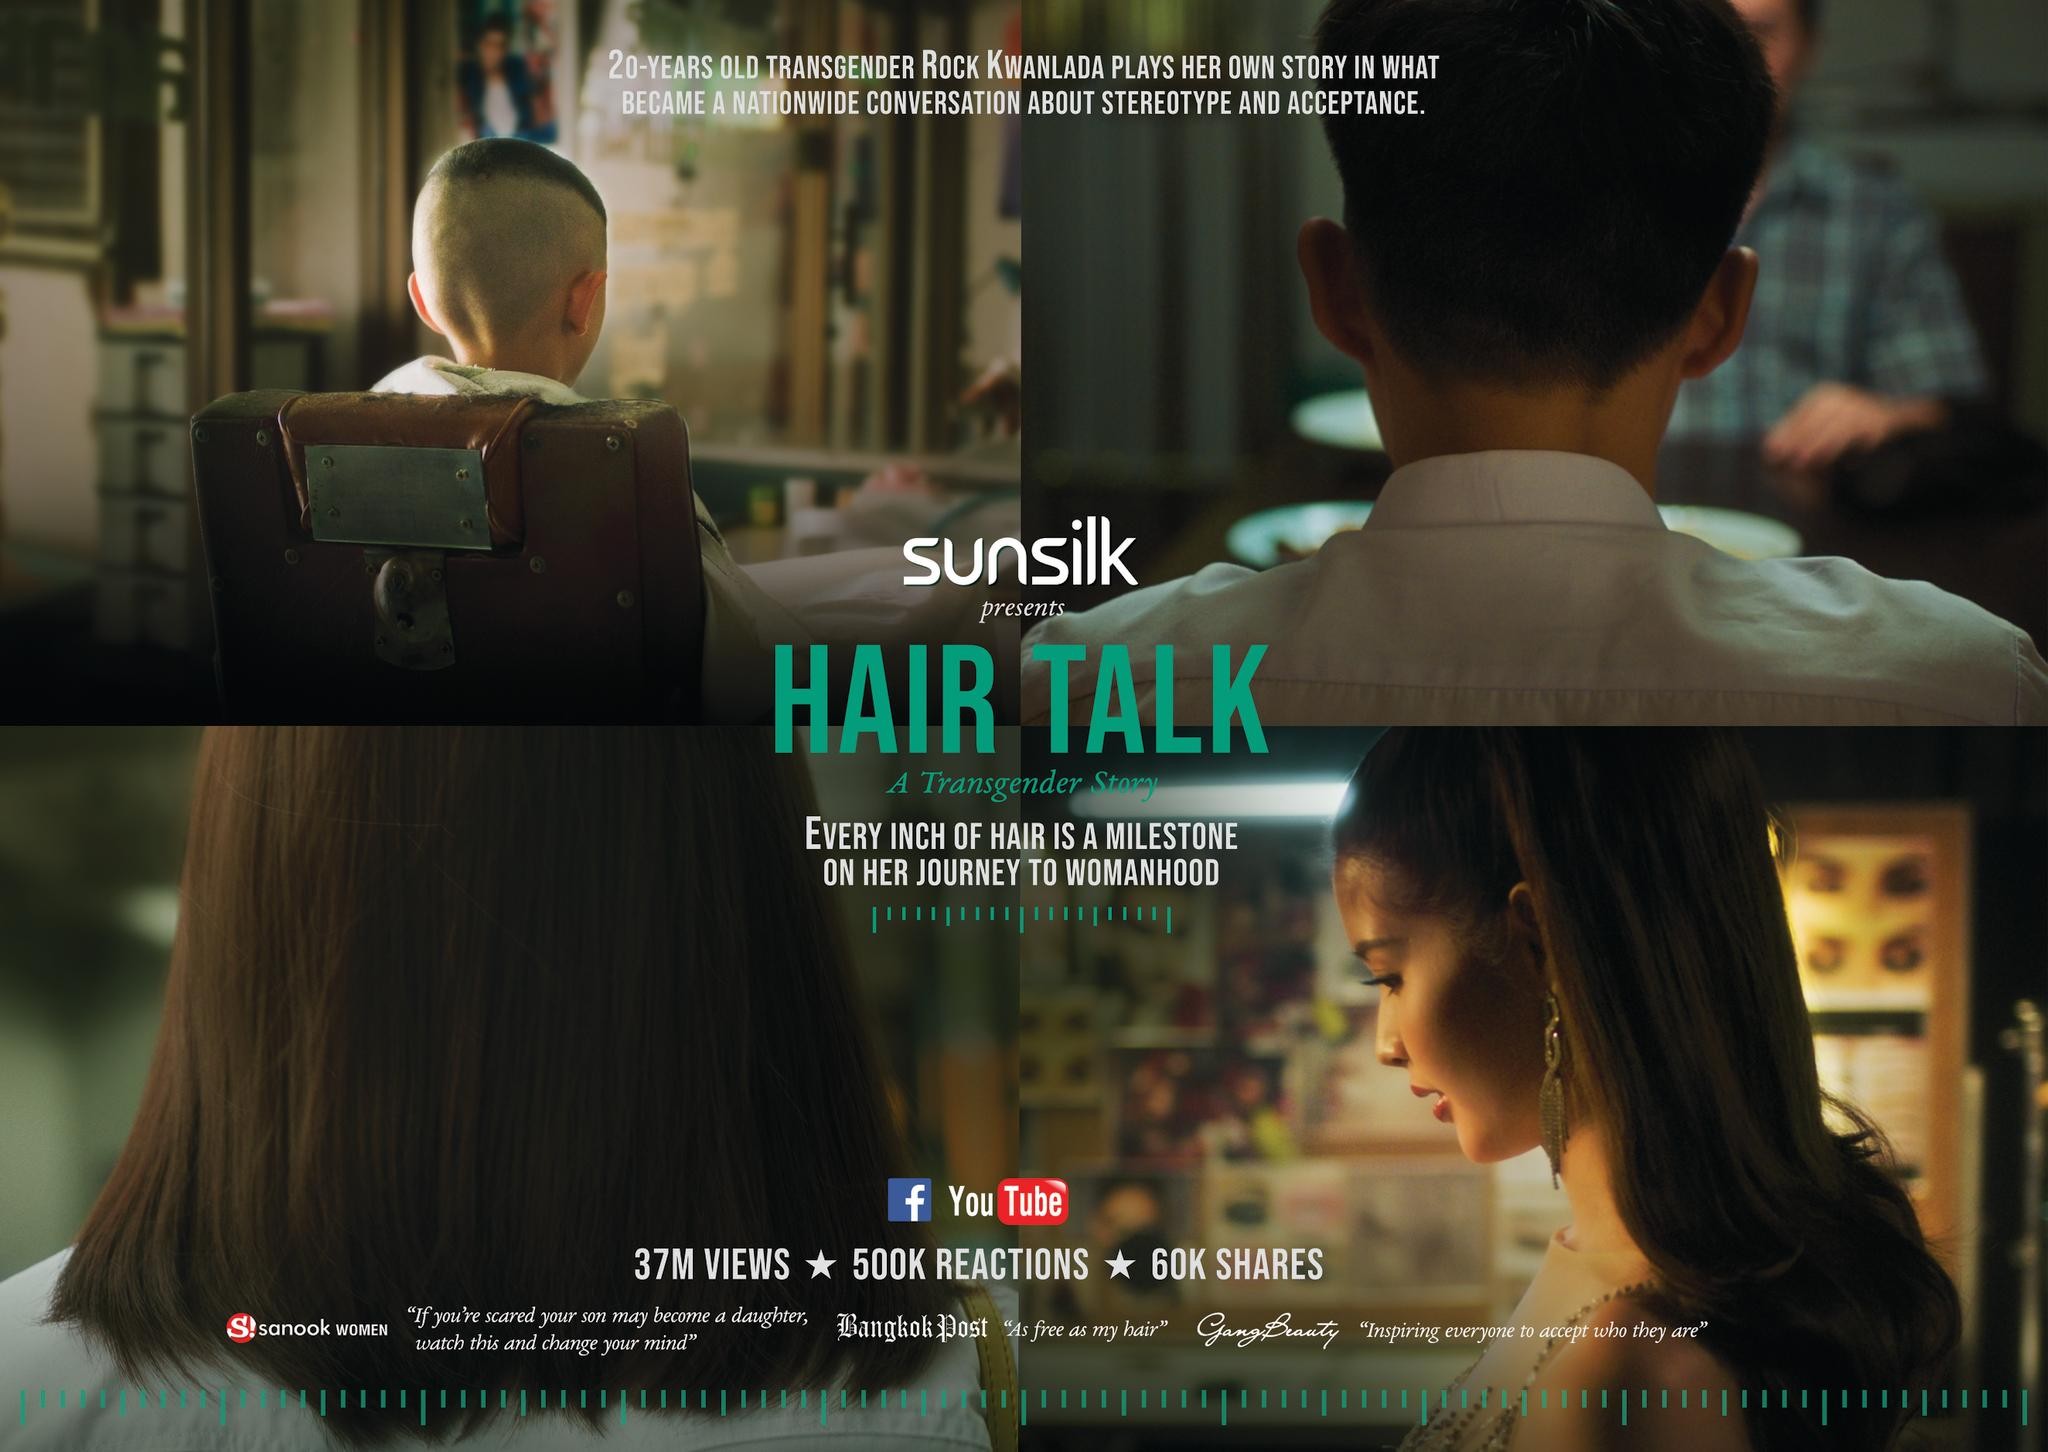 THE HAIR TALK